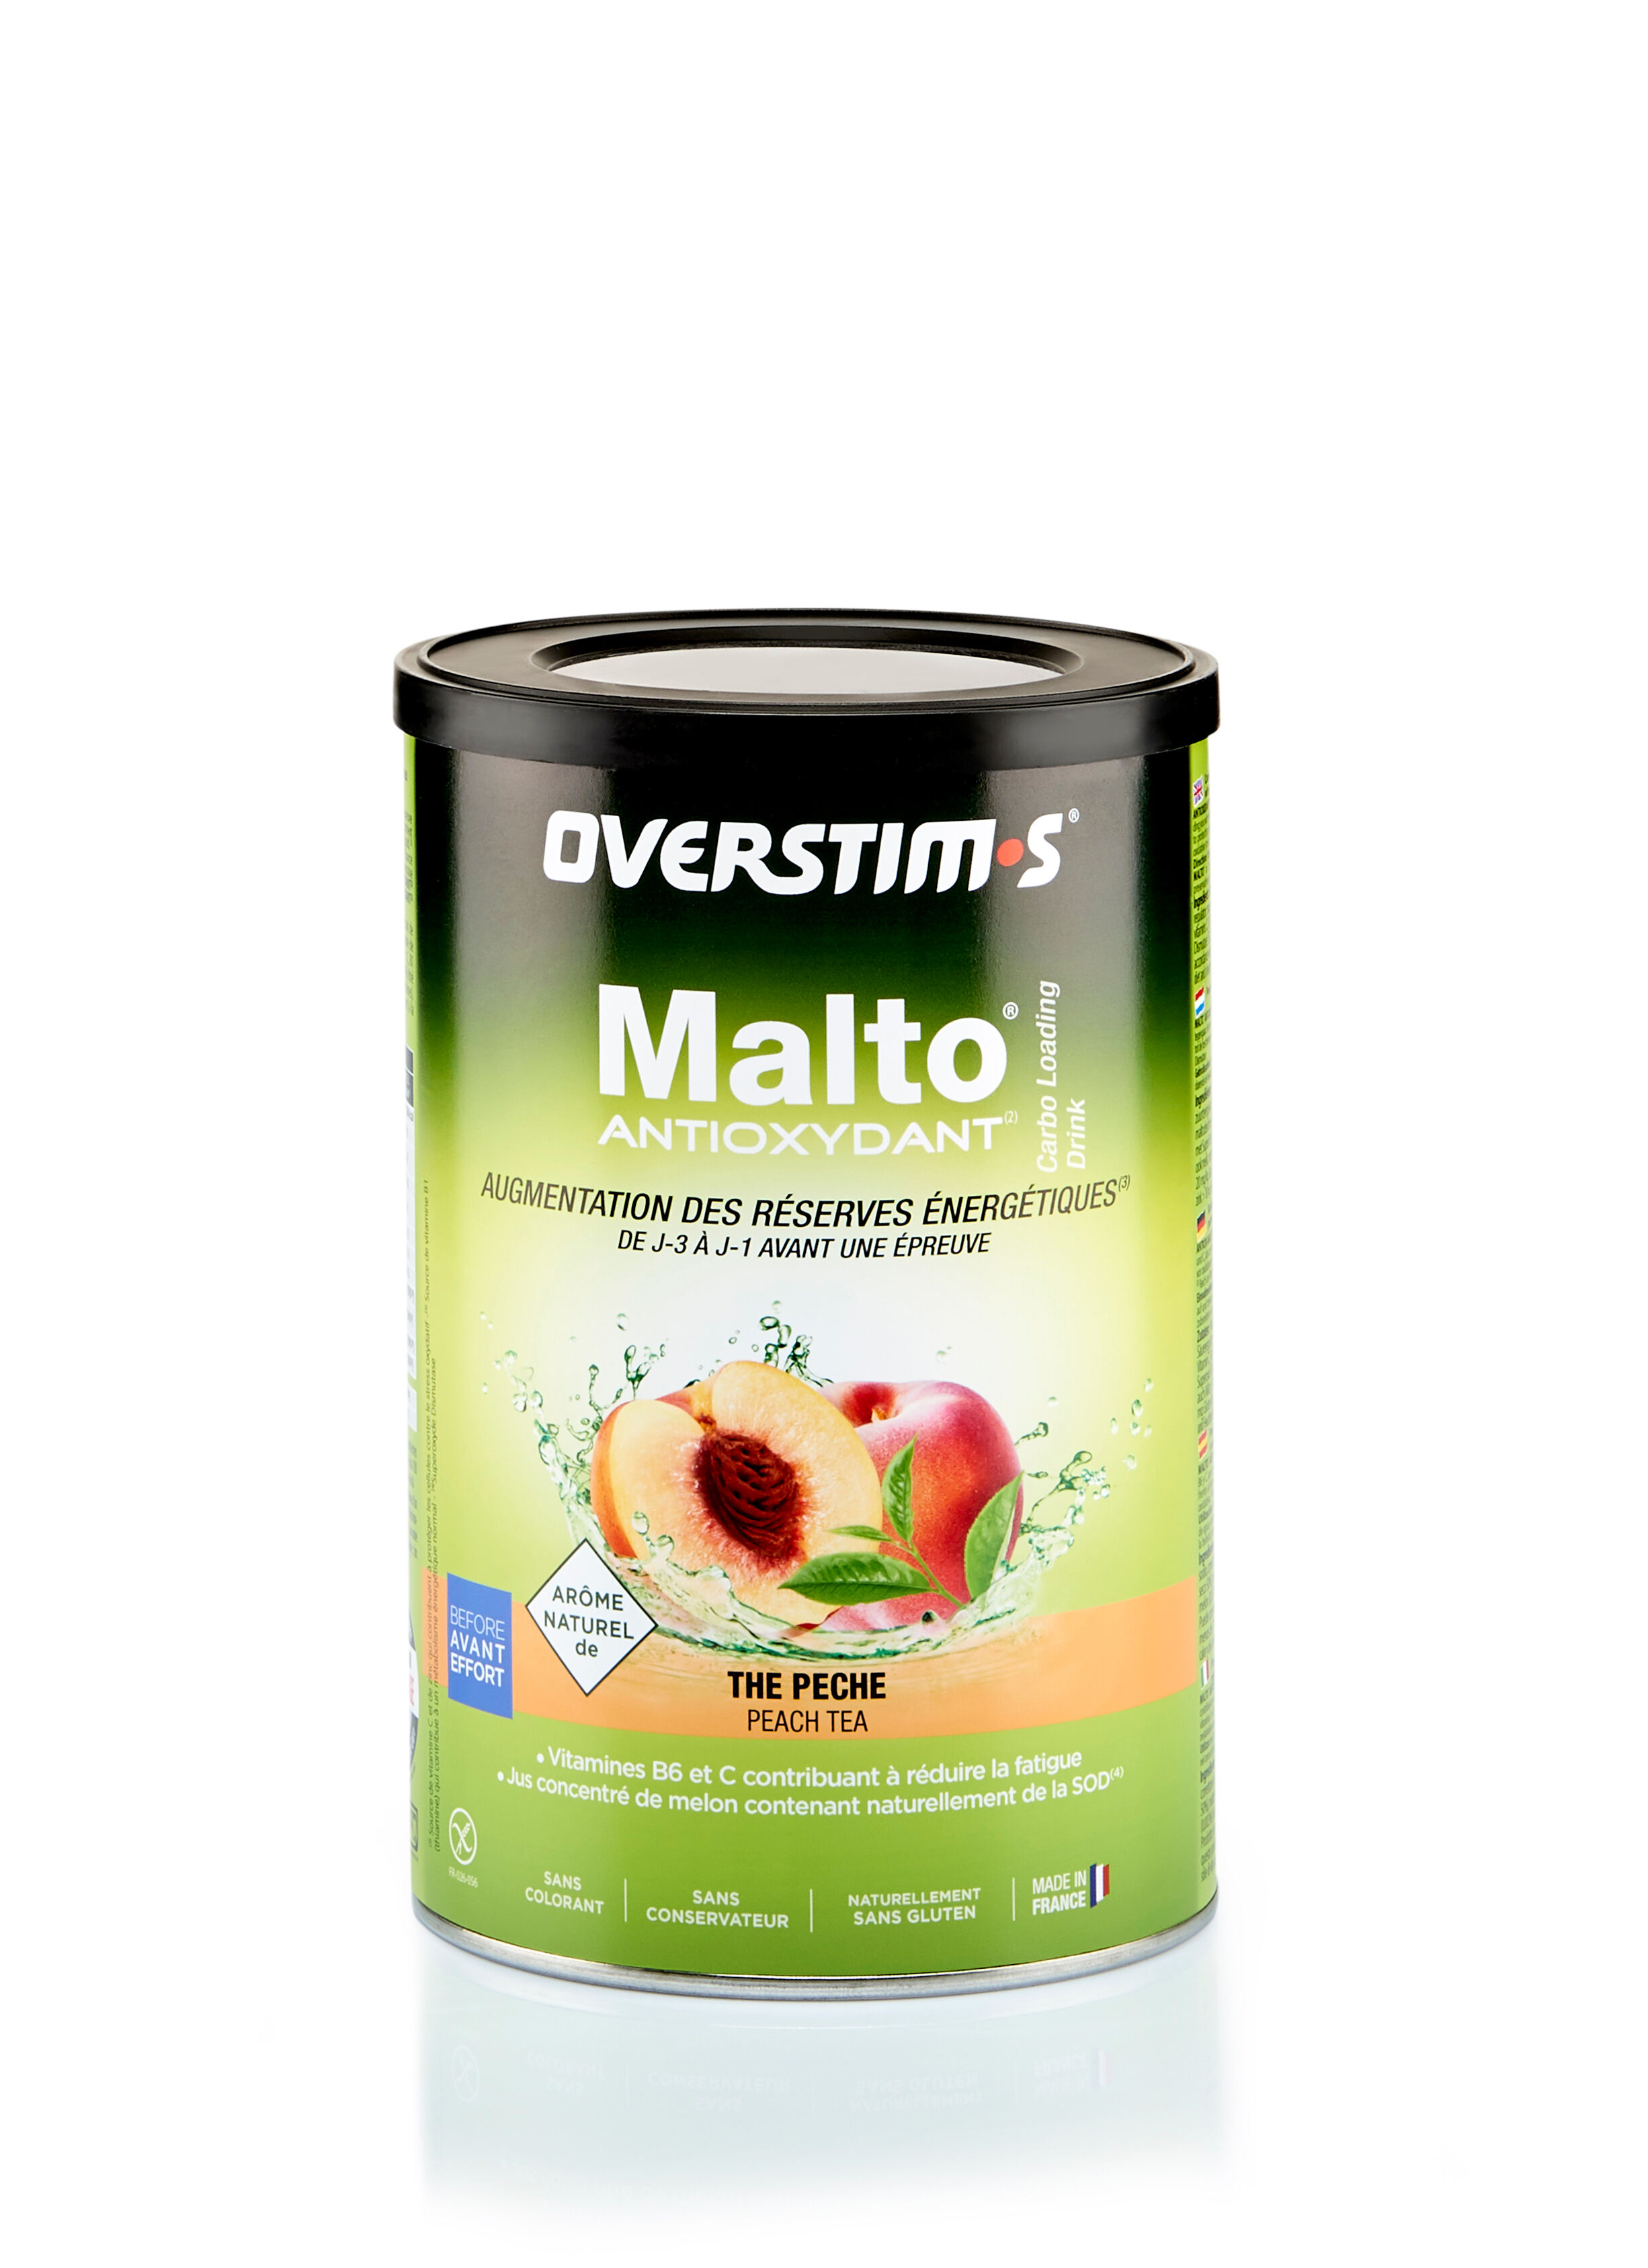 Overstim.s Malto Antioxydant - Sport drinks